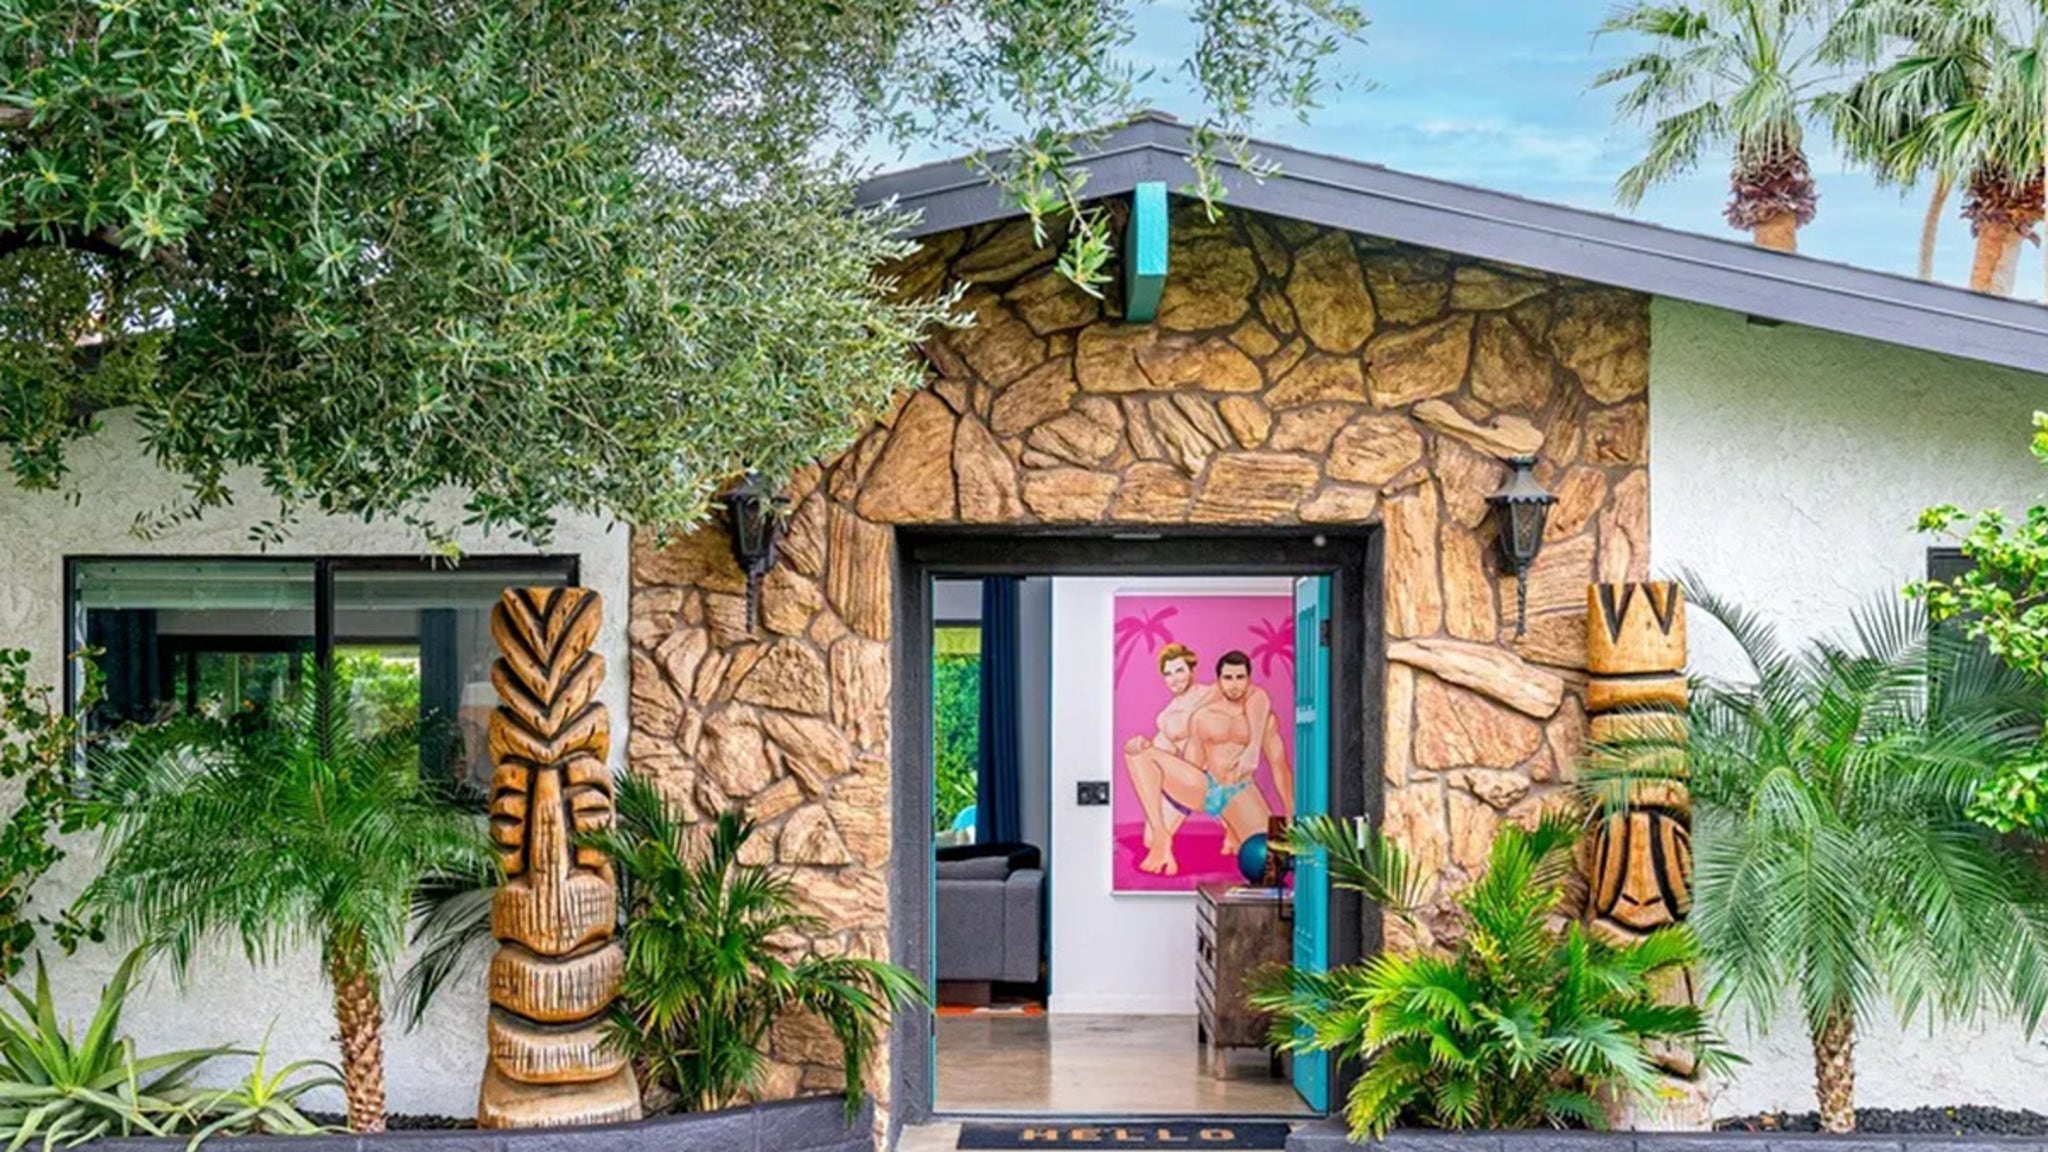 Mean Girls star Jonathan Bennett sells fun house in Palm Springs